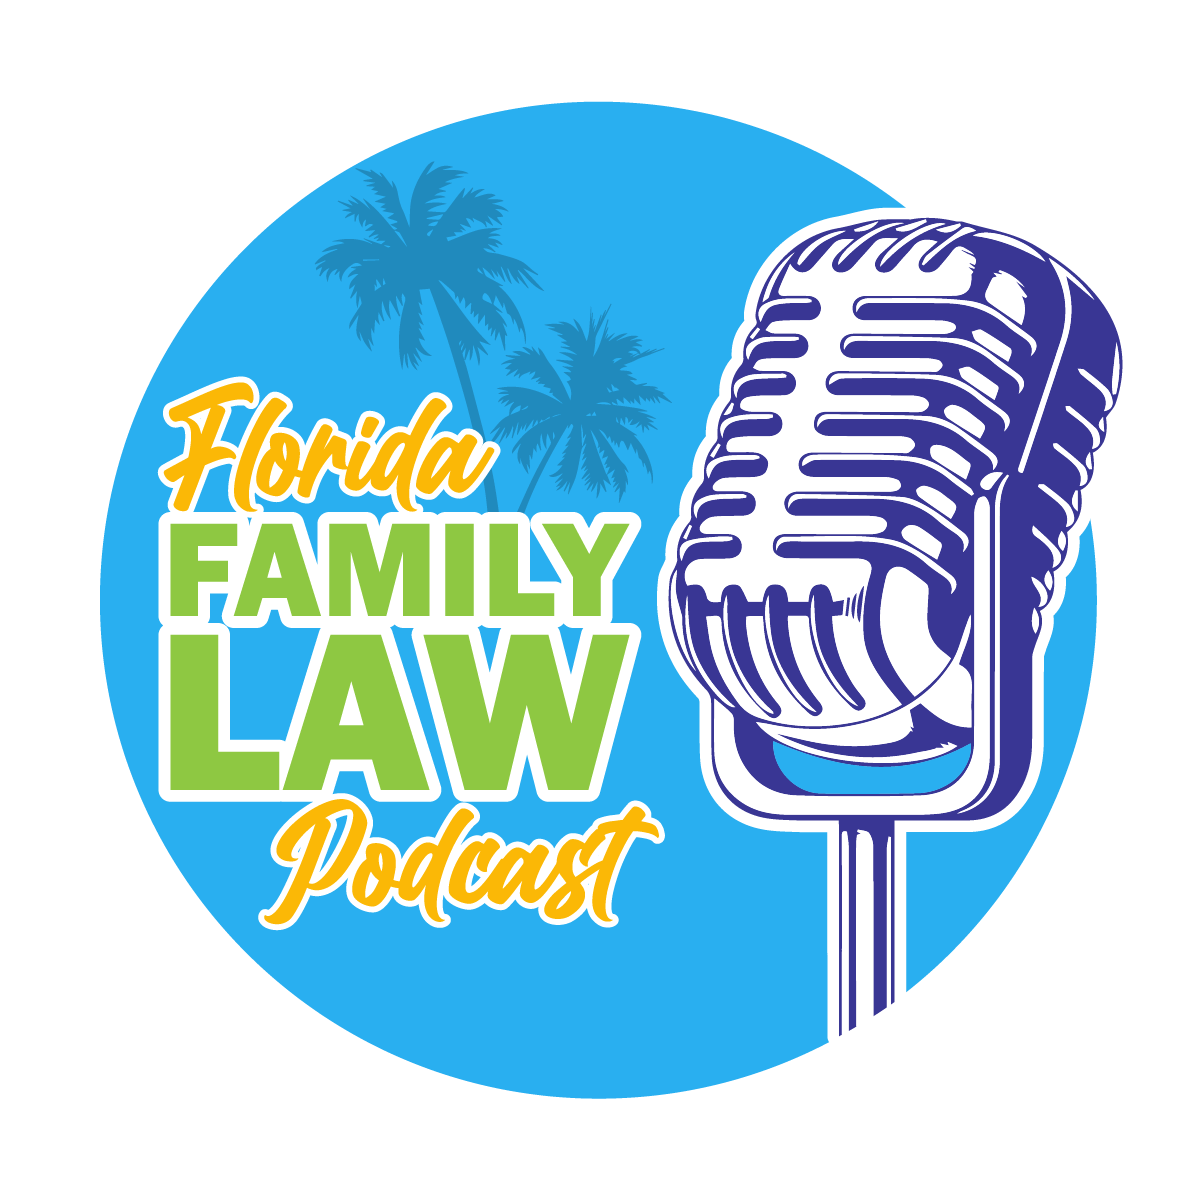 The Florida Family Law Podcast LOGO Finals logo